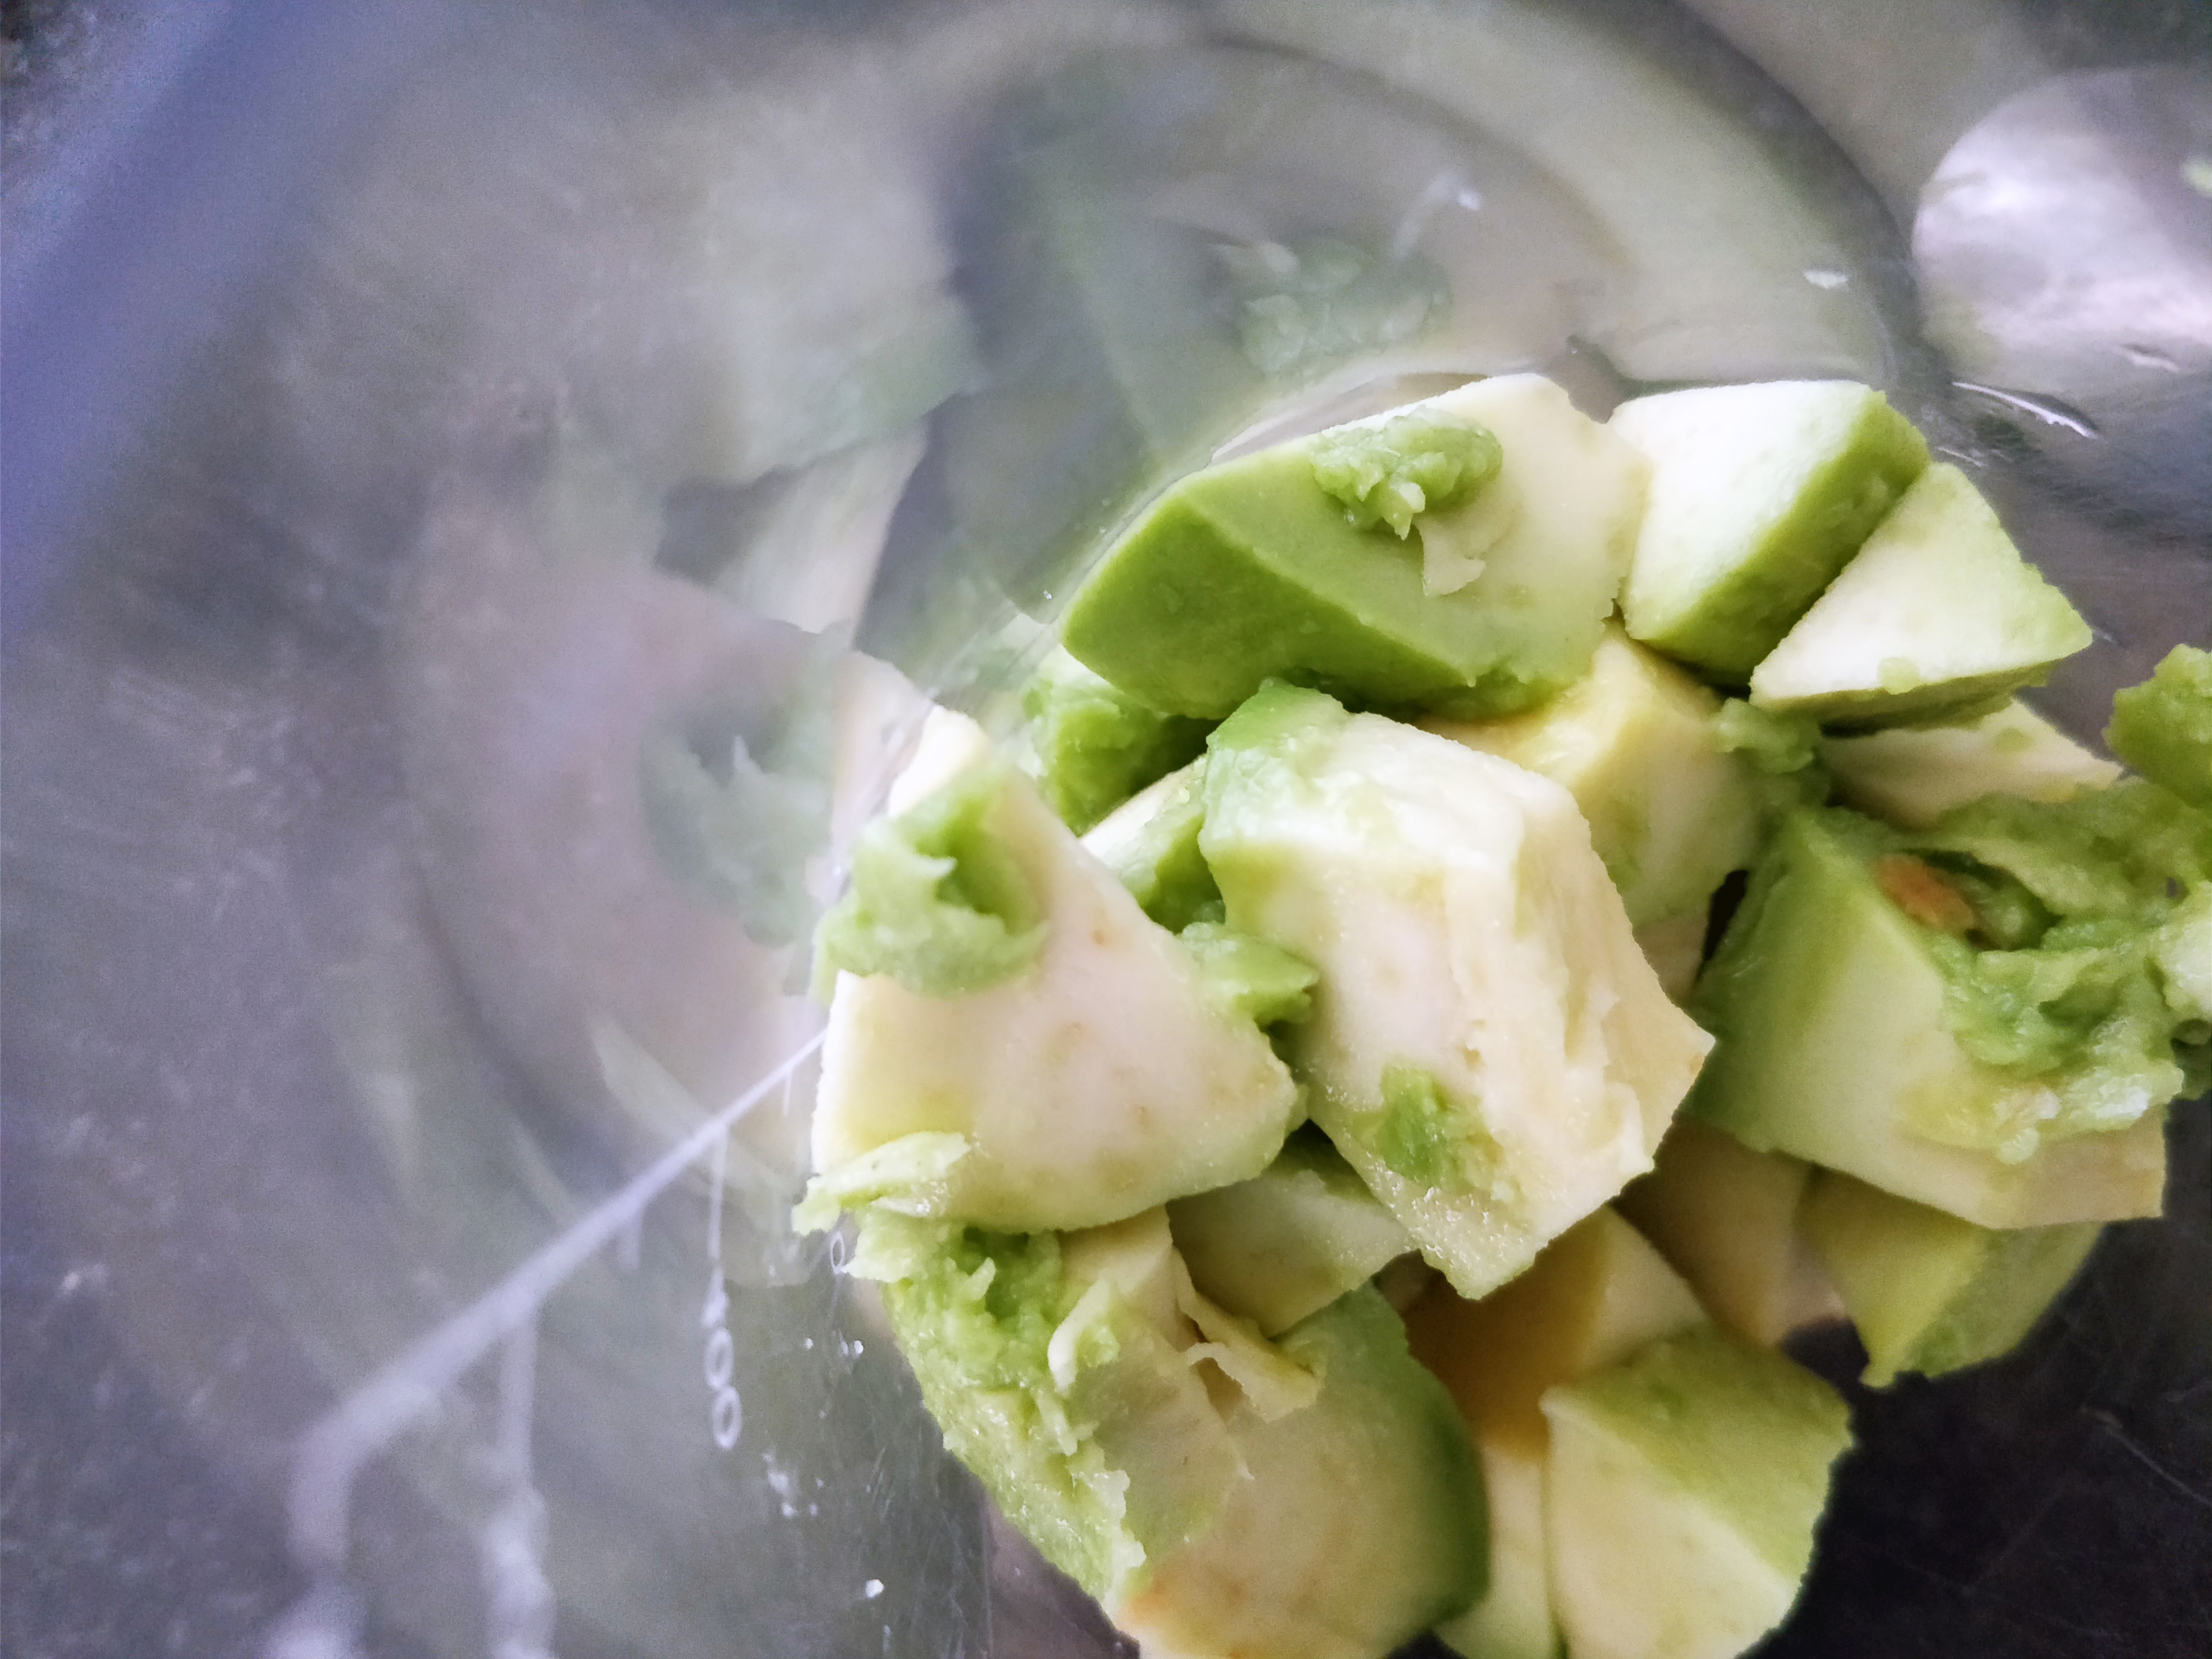 Cubed avocado in a blender